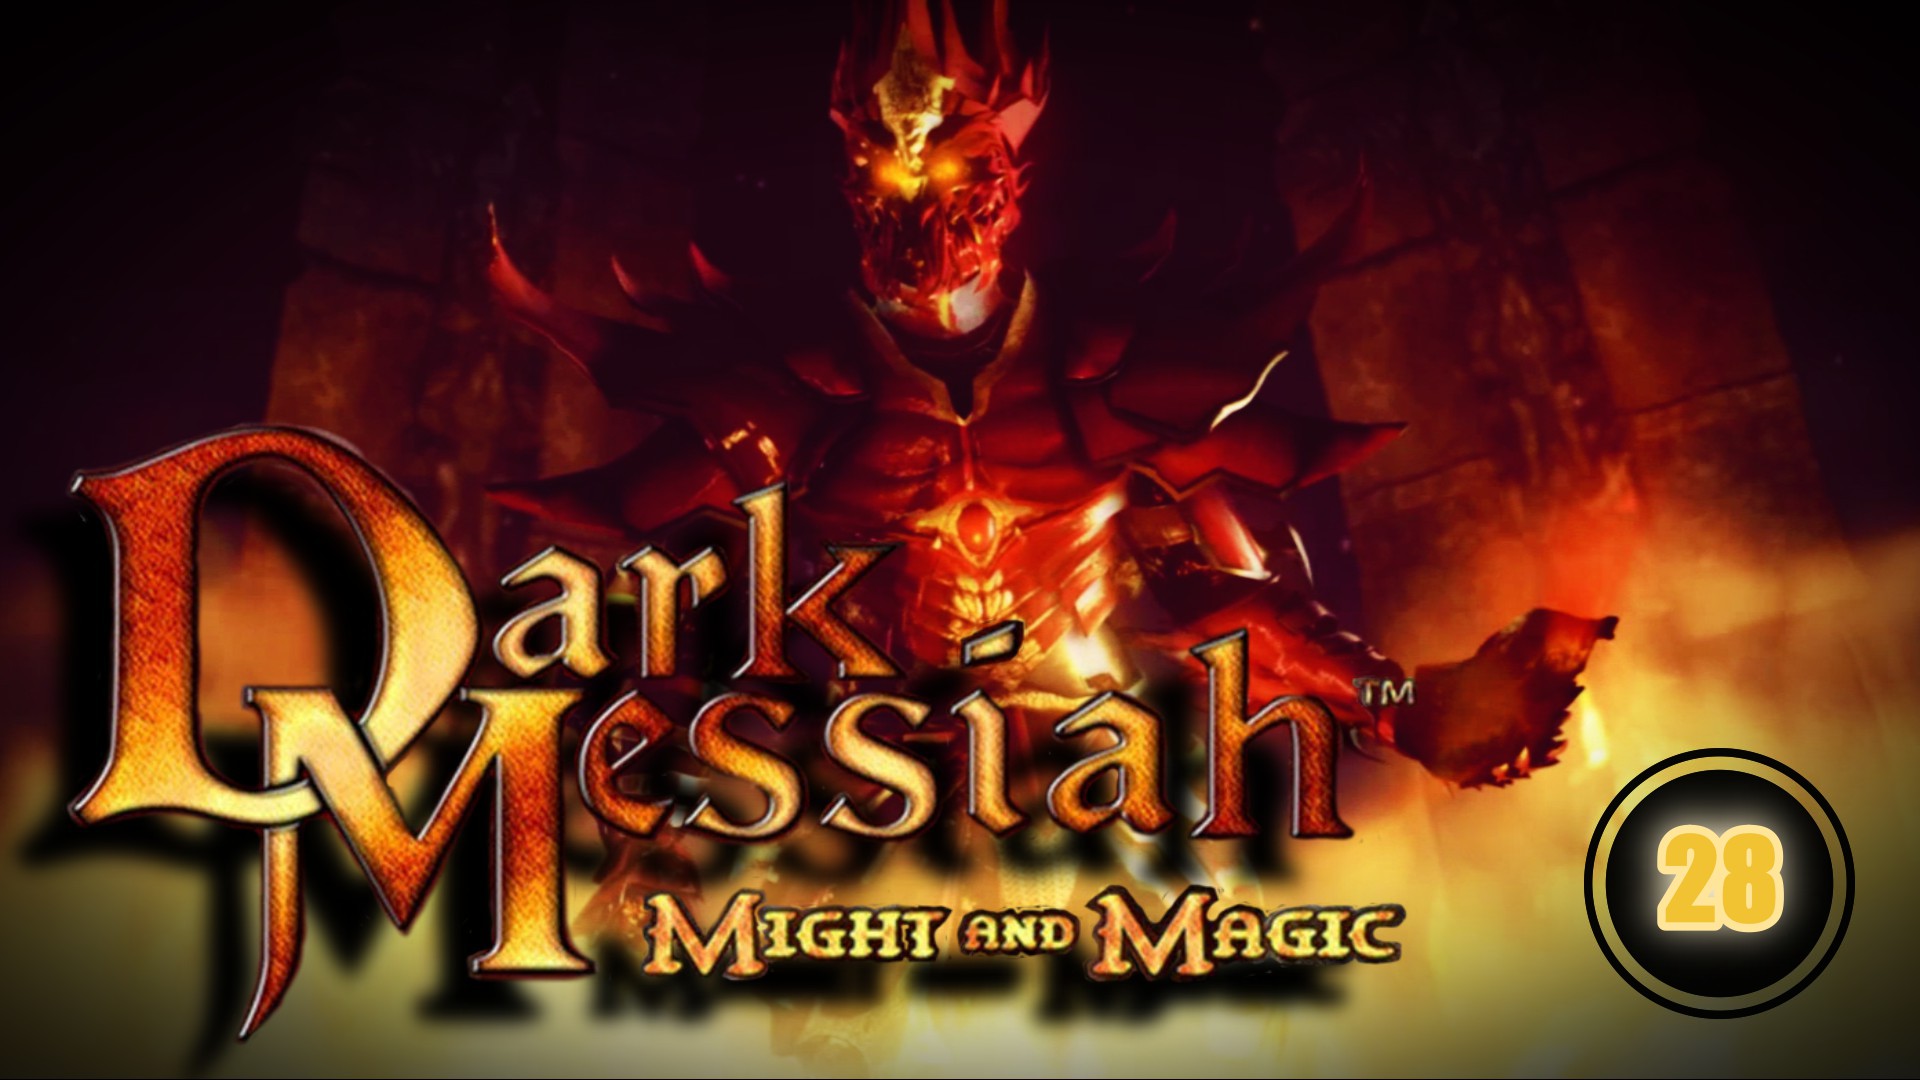 Dark Messiah of Might and Magic 28